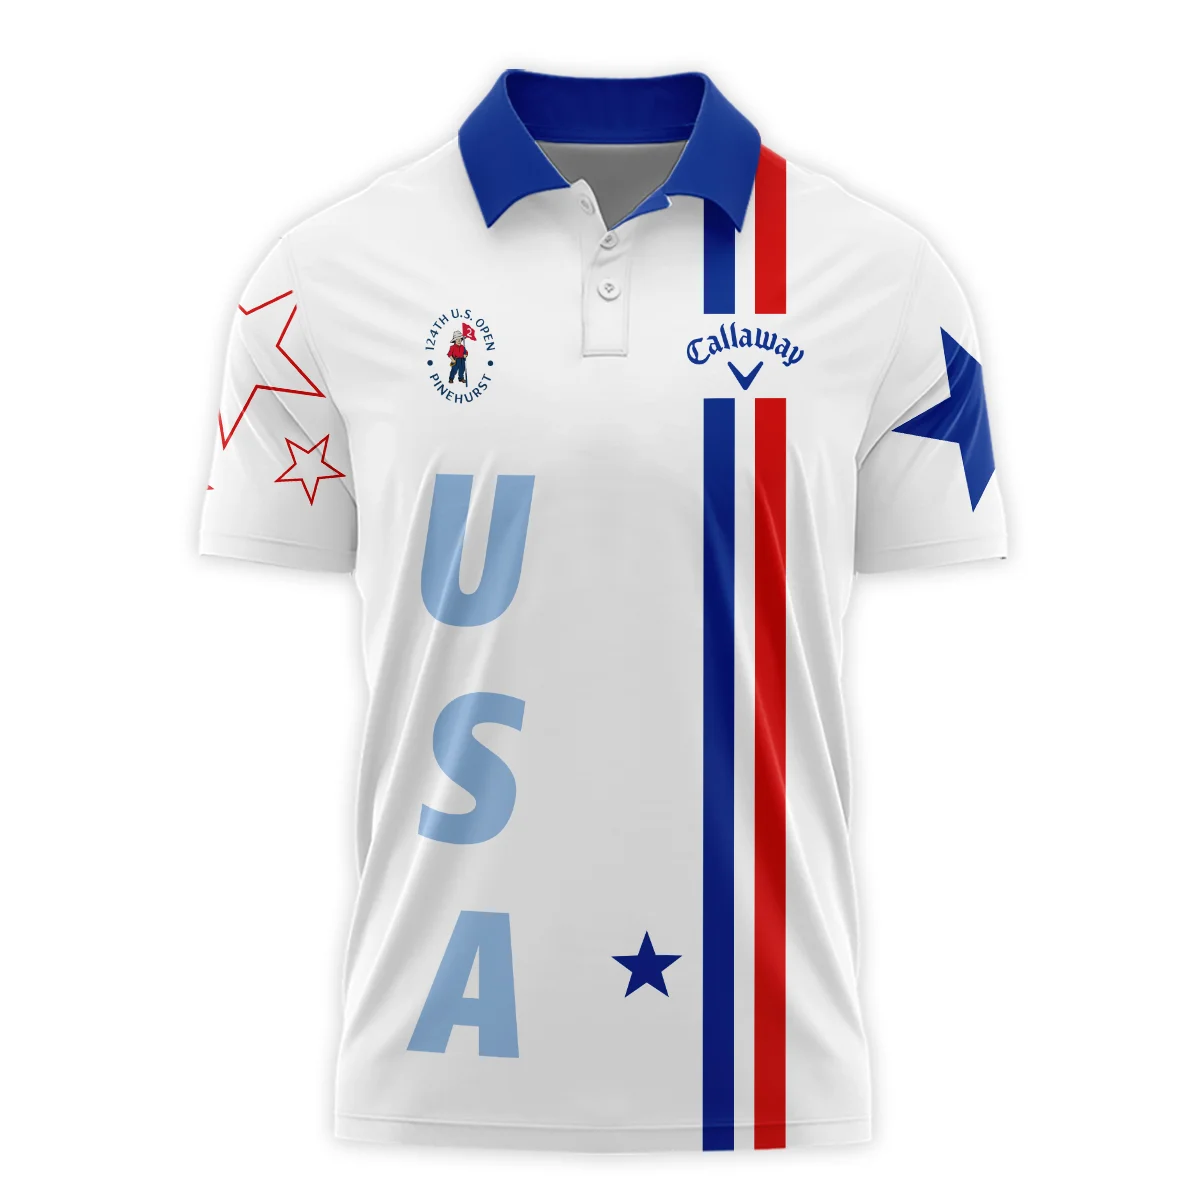 124th U.S. Open Pinehurst Callaway Blue Red Line White Polo Shirt Style Classic Polo Shirt For Men